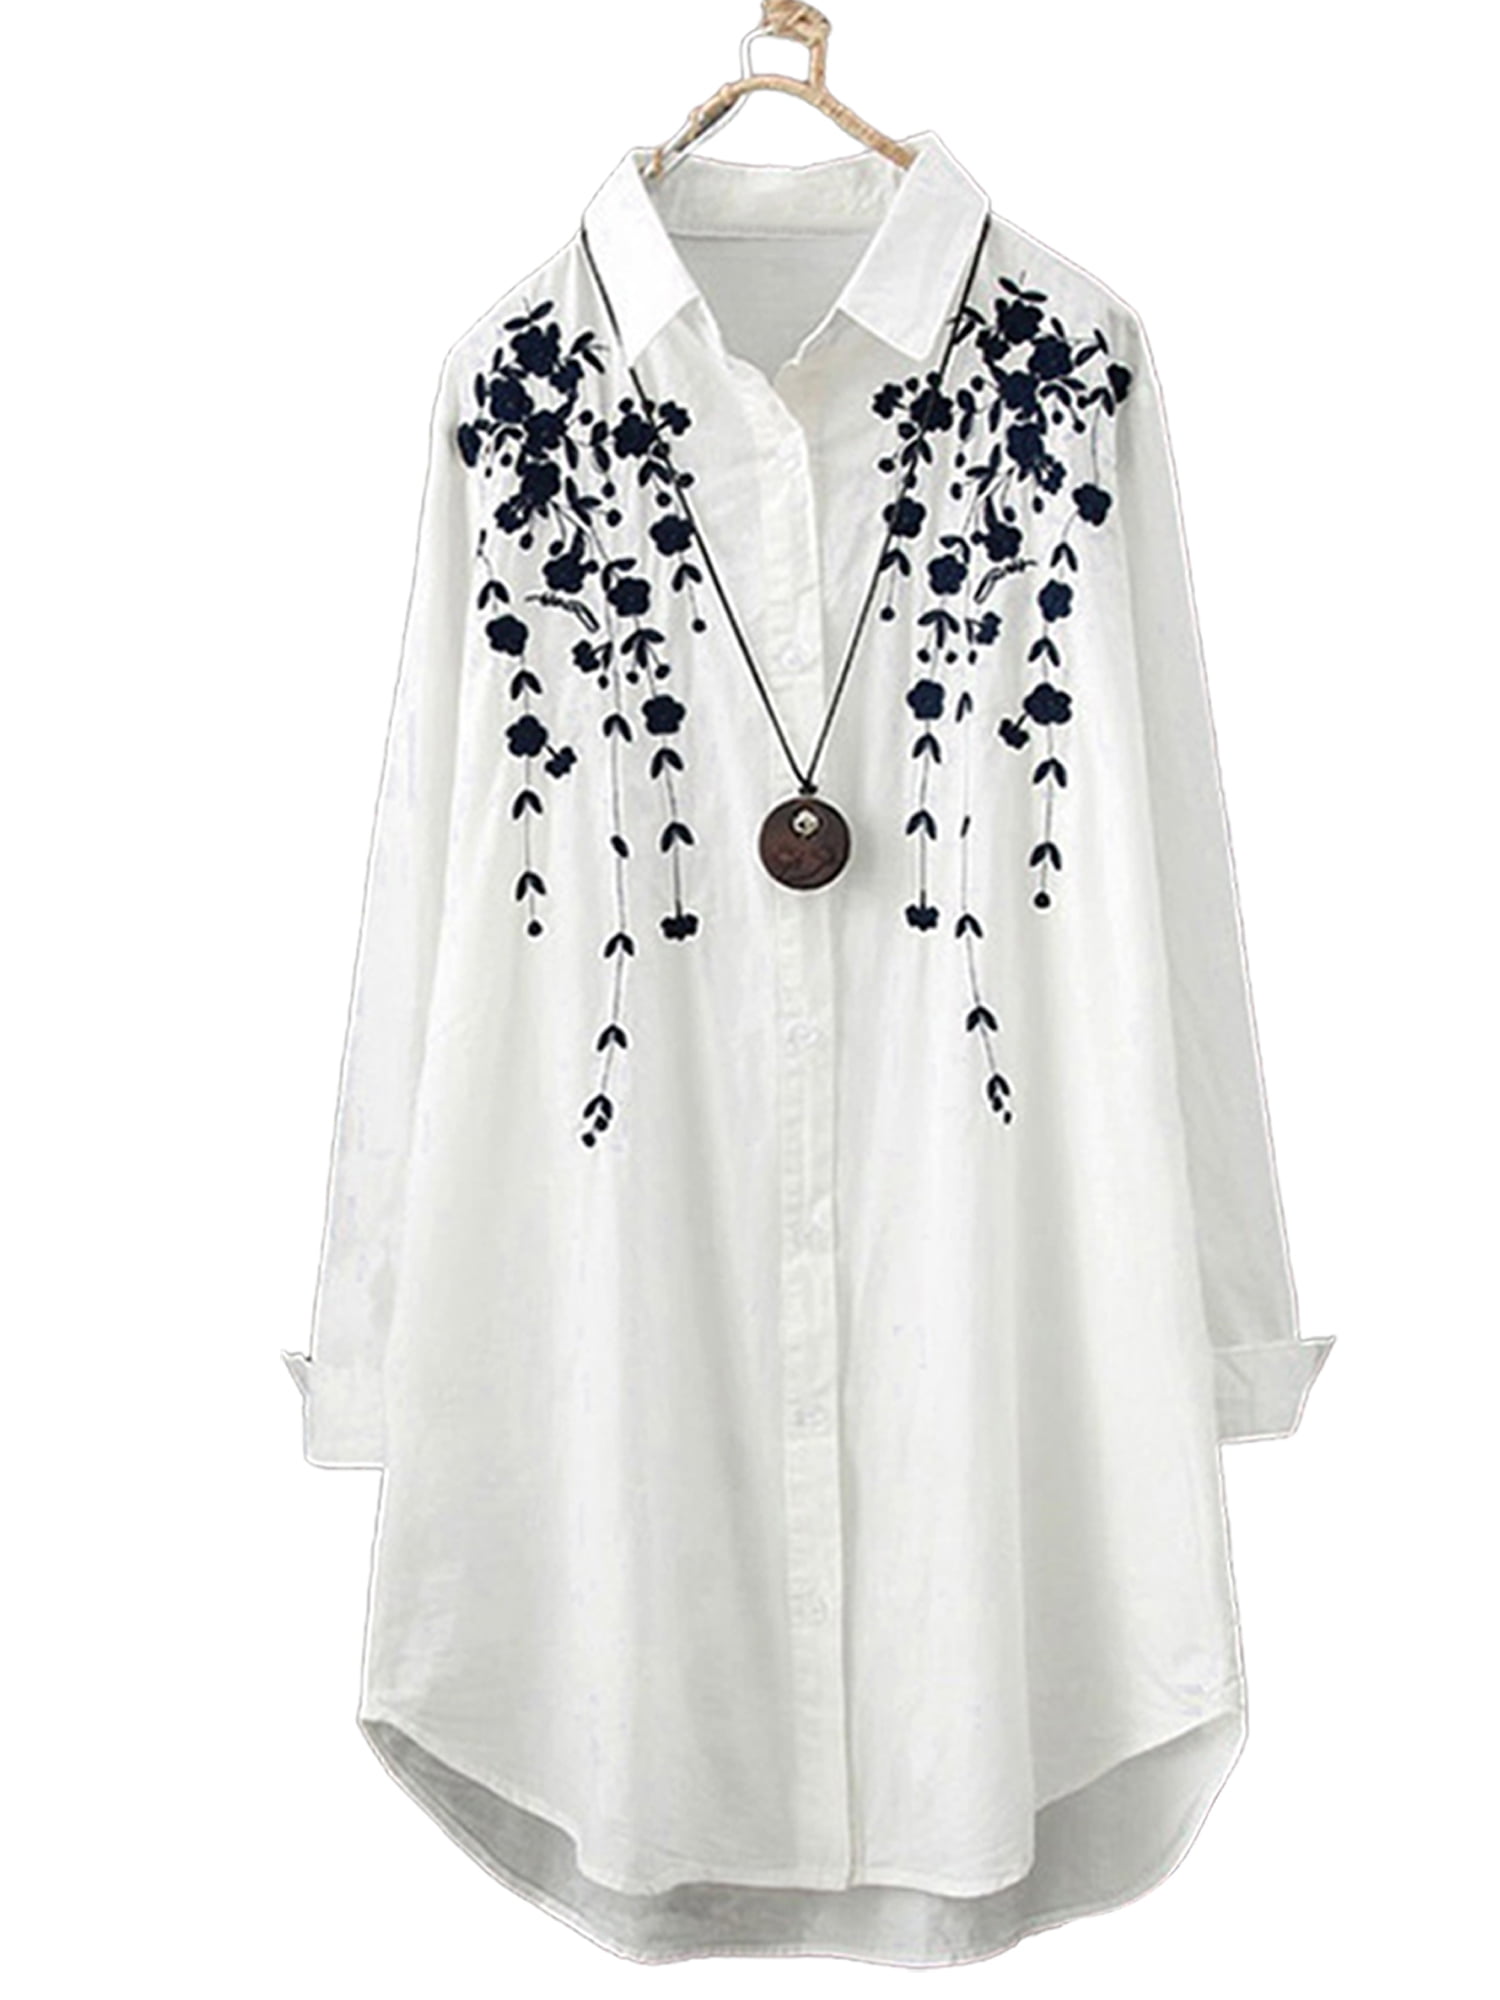 PALACLOTH Women Rattan Printing Turn-down Collar Shirt Long Style Autumn  Long Sleeve Plus Size Tops